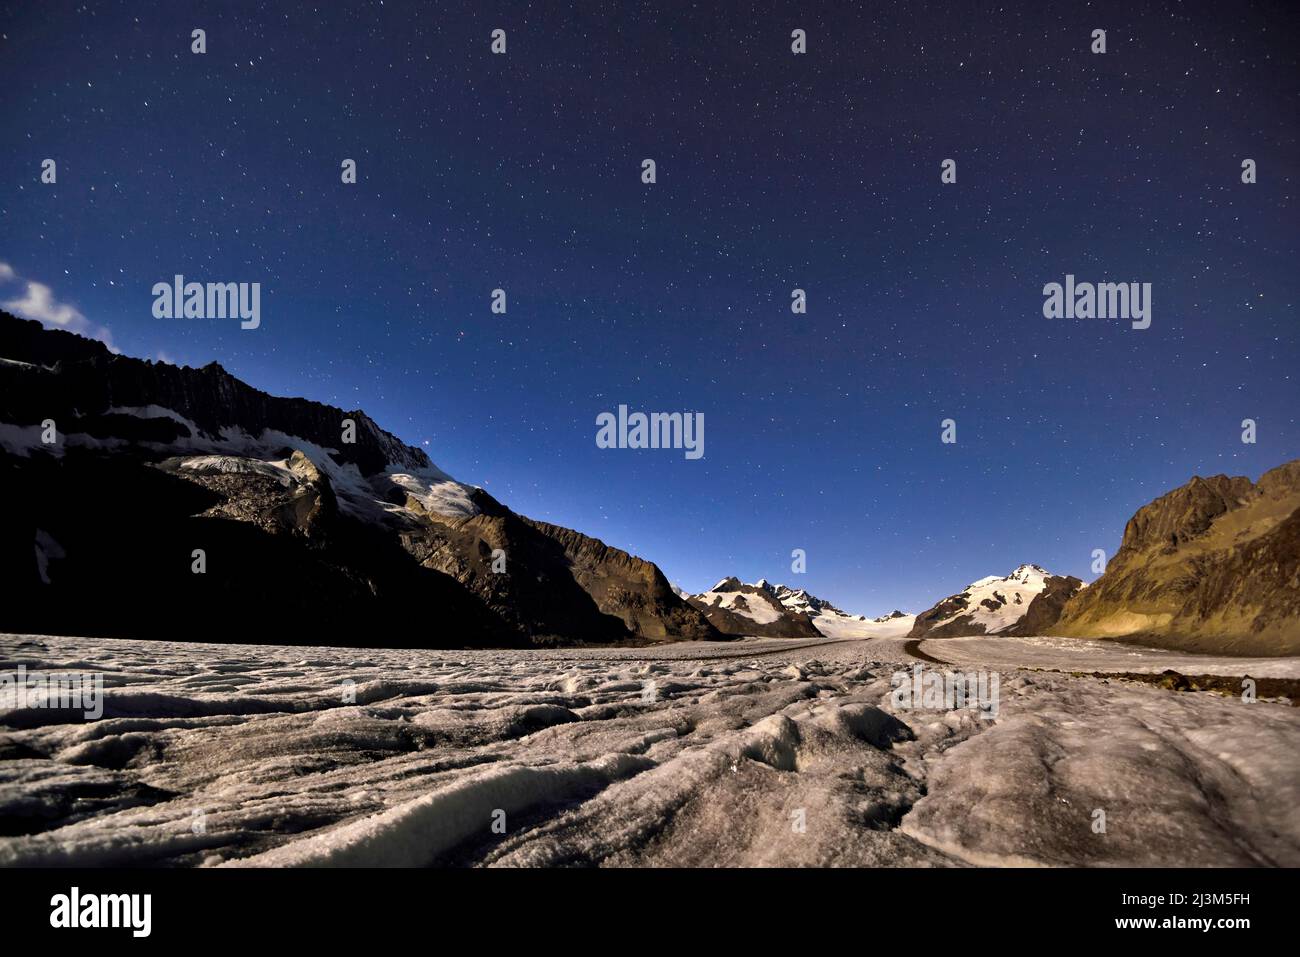 Paesaggio selvaggio di notte sul Ghiacciaio Aletsch; Ghiacciaio Aletsch, Fiesch, Svizzera. Foto Stock